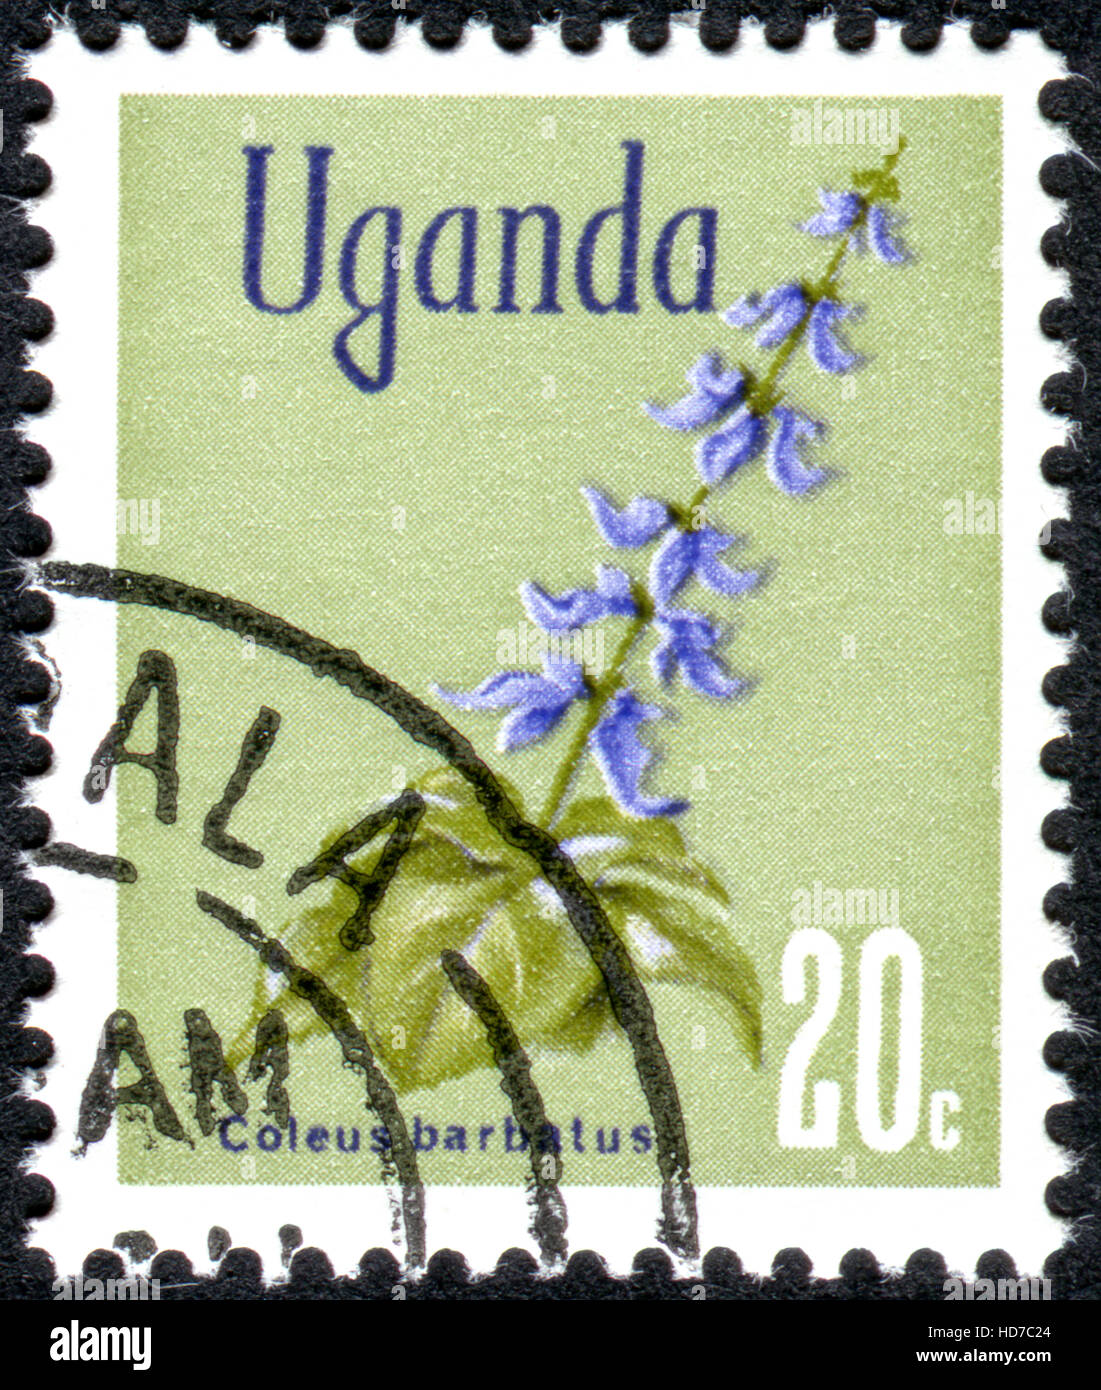 UGANDA - CIRCA 1967: A stamp printed in Uganda, shows the flower Plectranthus barbatus (Indian coleus), circa 1967 Stock Photo